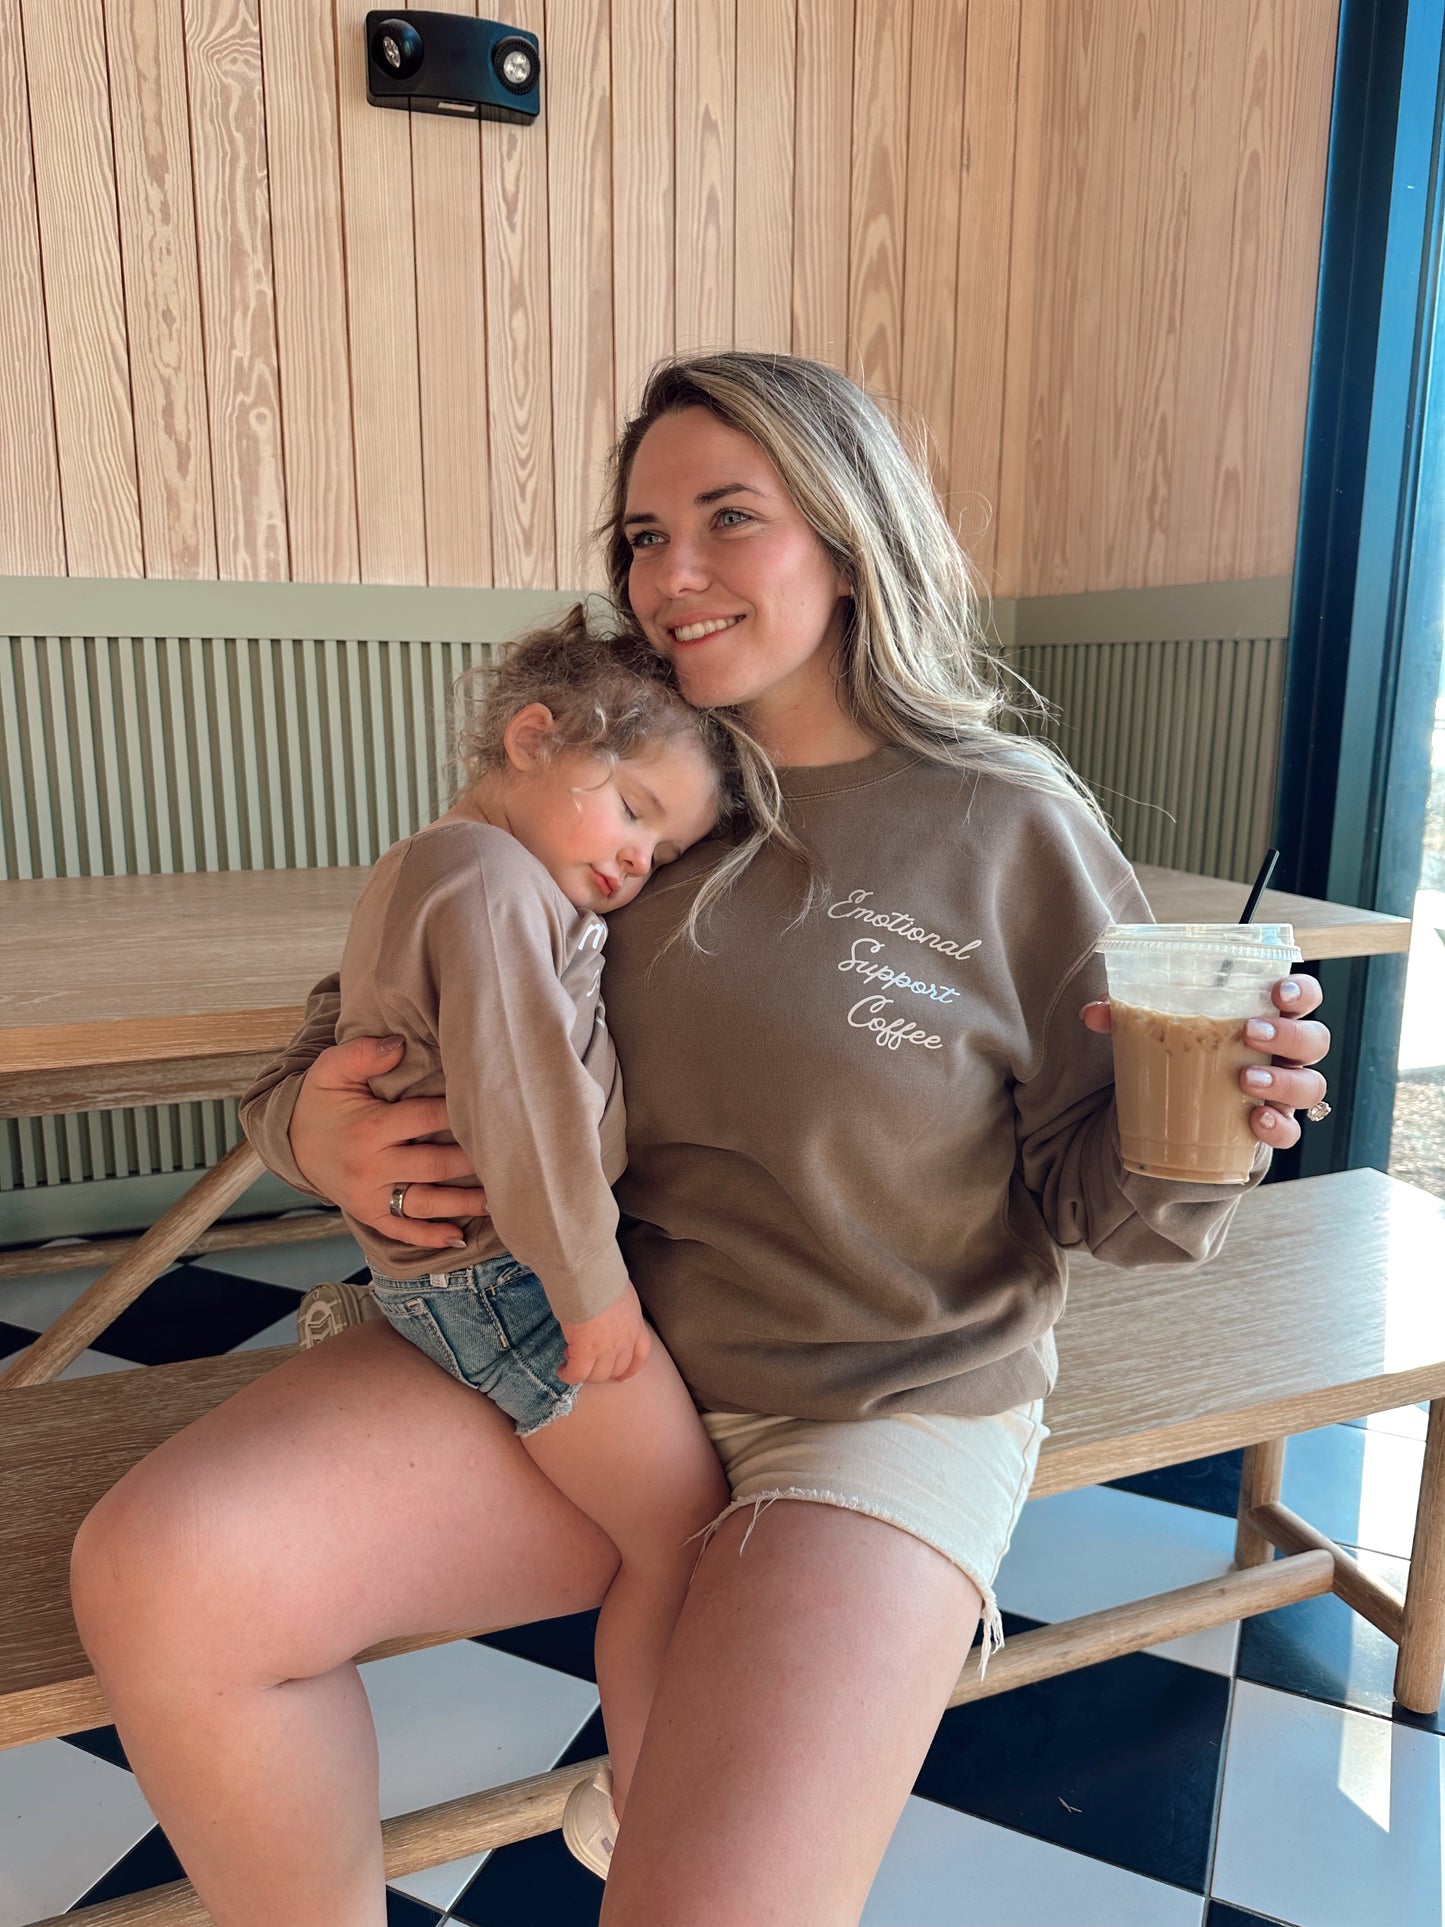 Emotional Support Coffee - Sweatshirt (Cocoa)